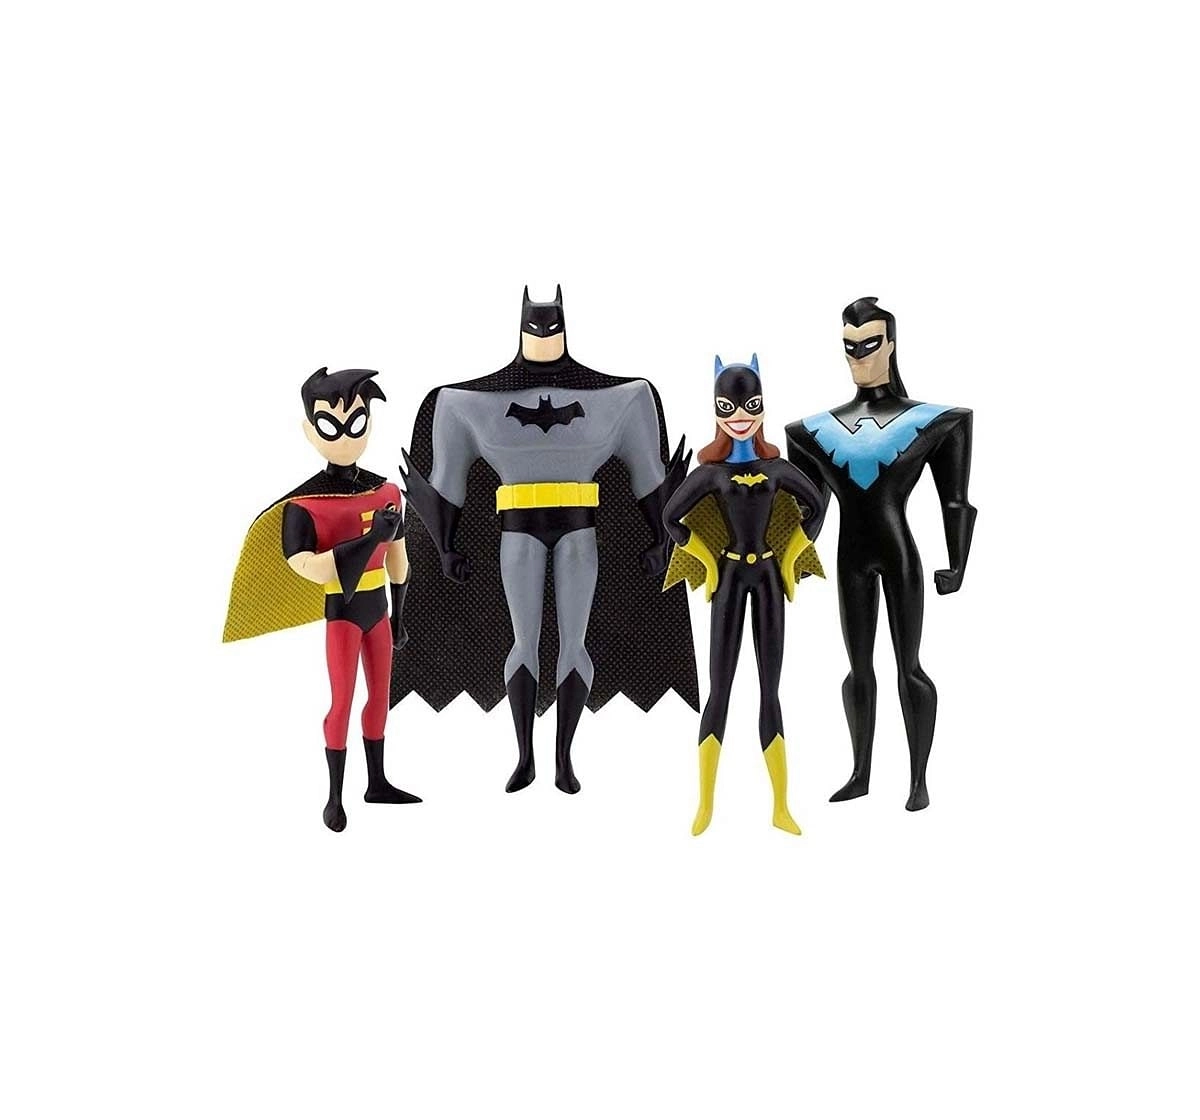 Nj Croce the New Batman Adventures Masked Heroes Bendable, Multi Color Action Figures for Kids age 3Y+ 